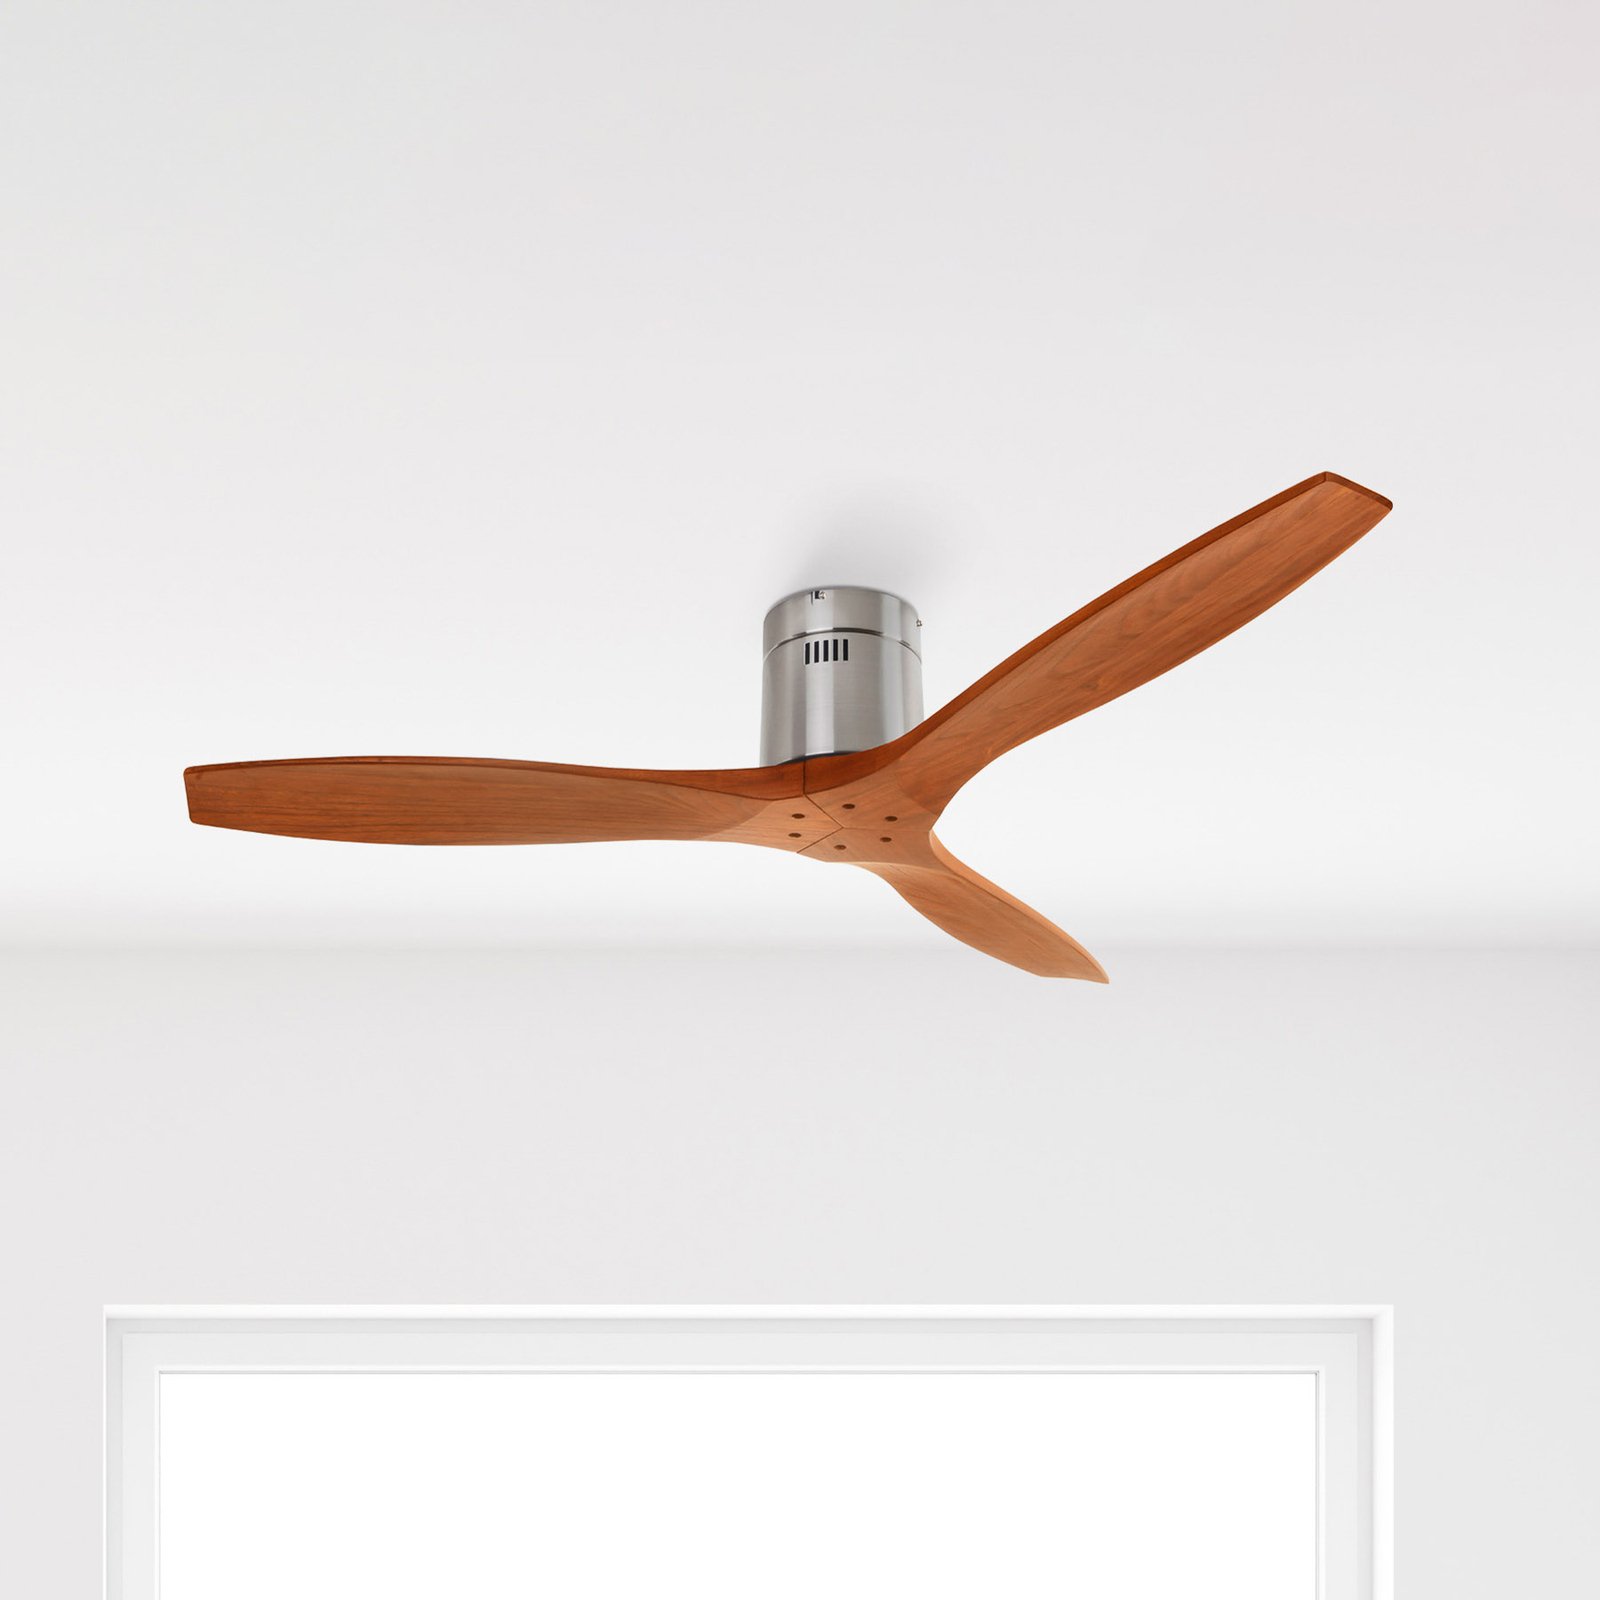 Stem ceiling fan with wooden blades, dark wood